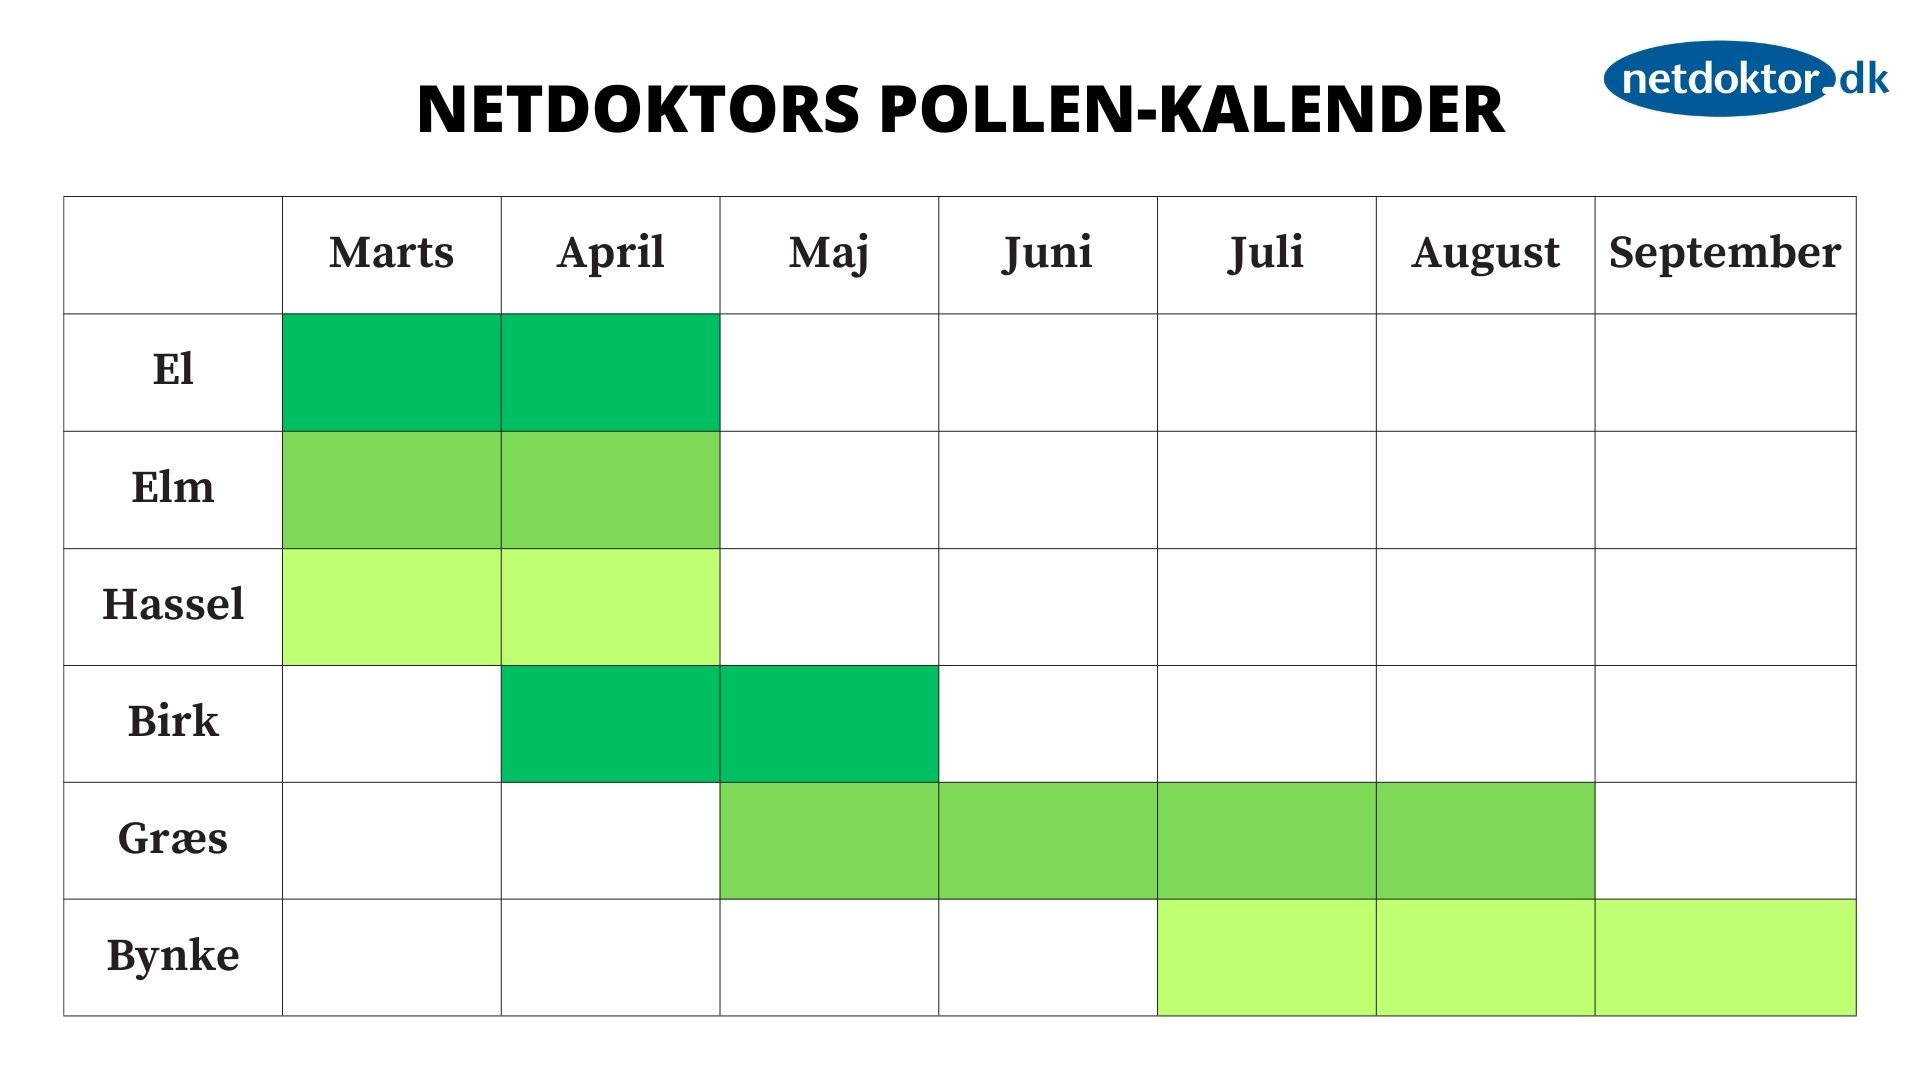 Netdoktors pollen-kalender